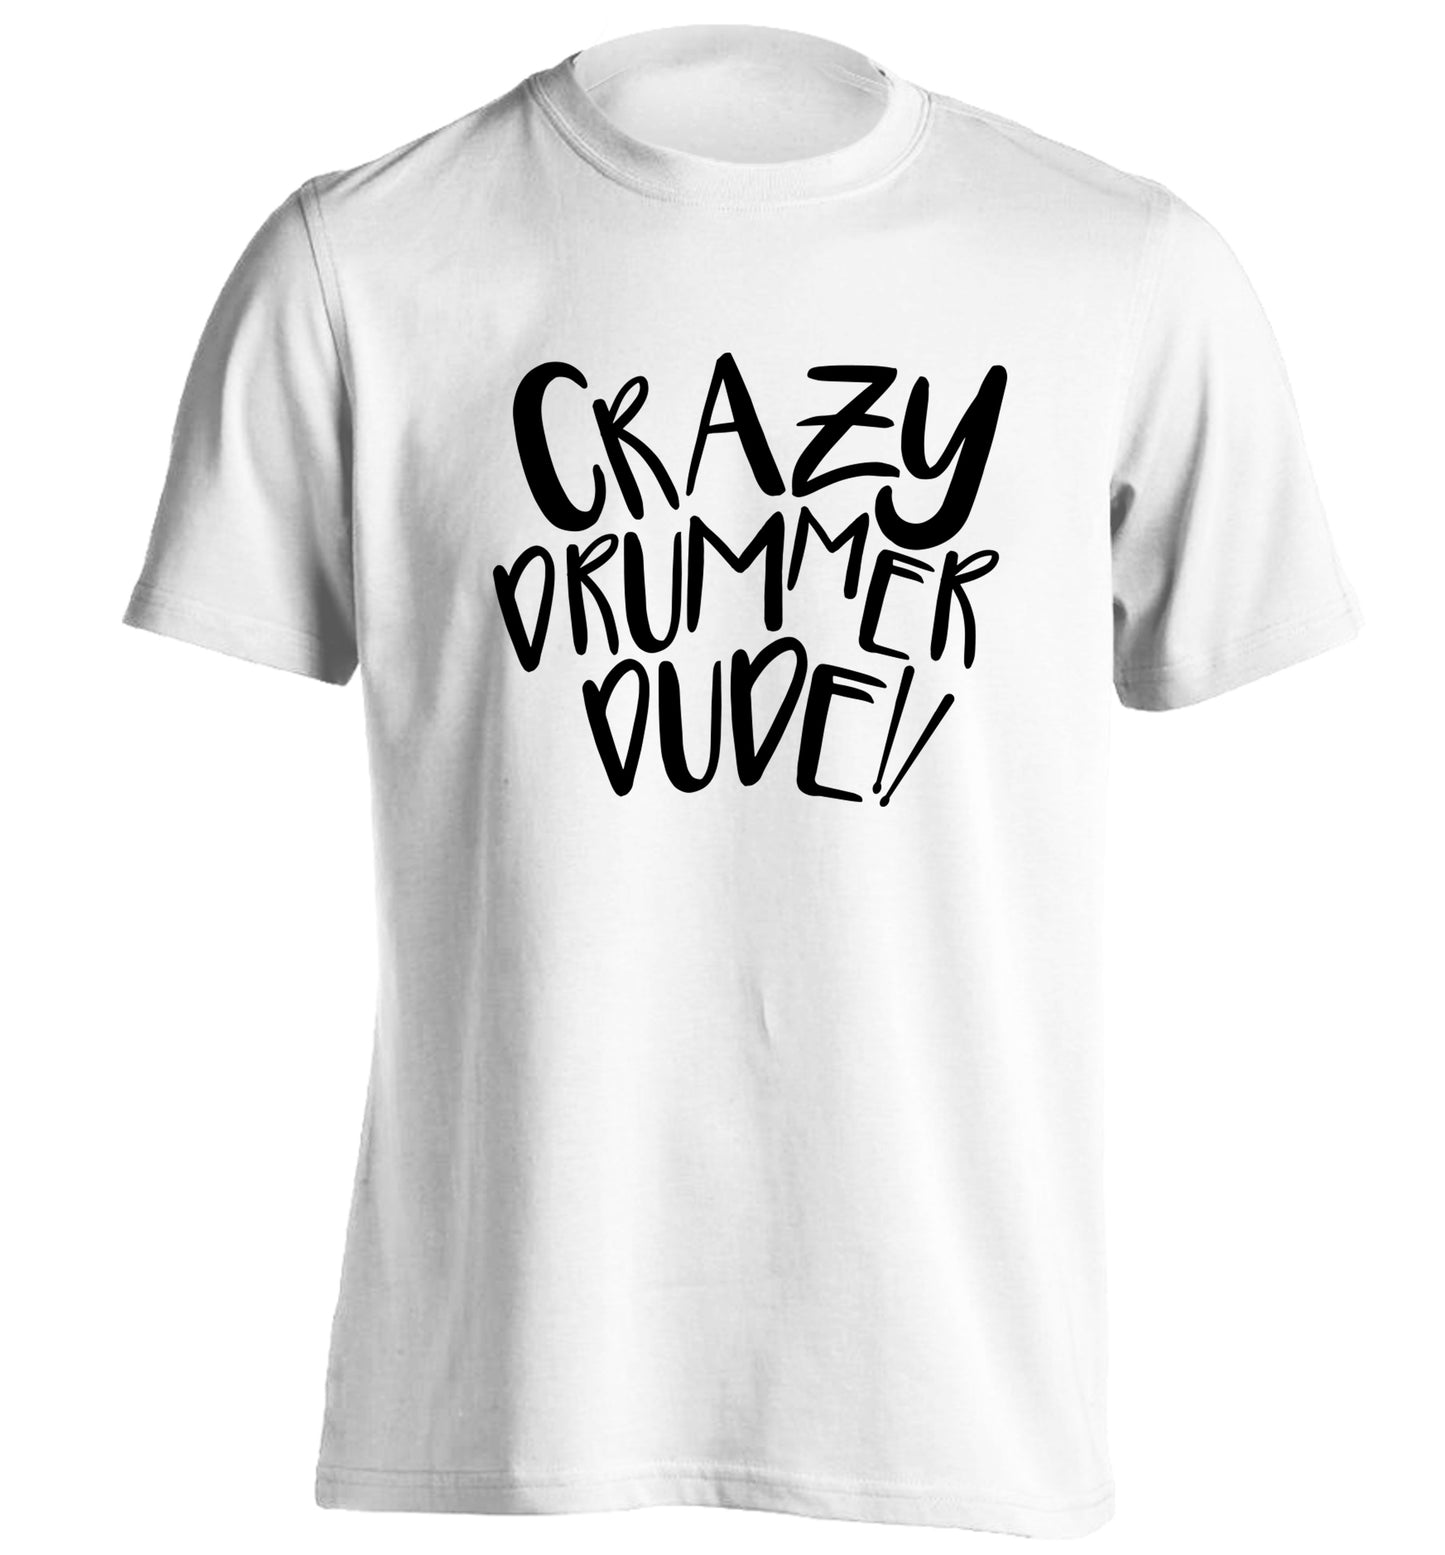 Crazy drummer dude adults unisex white Tshirt 2XL